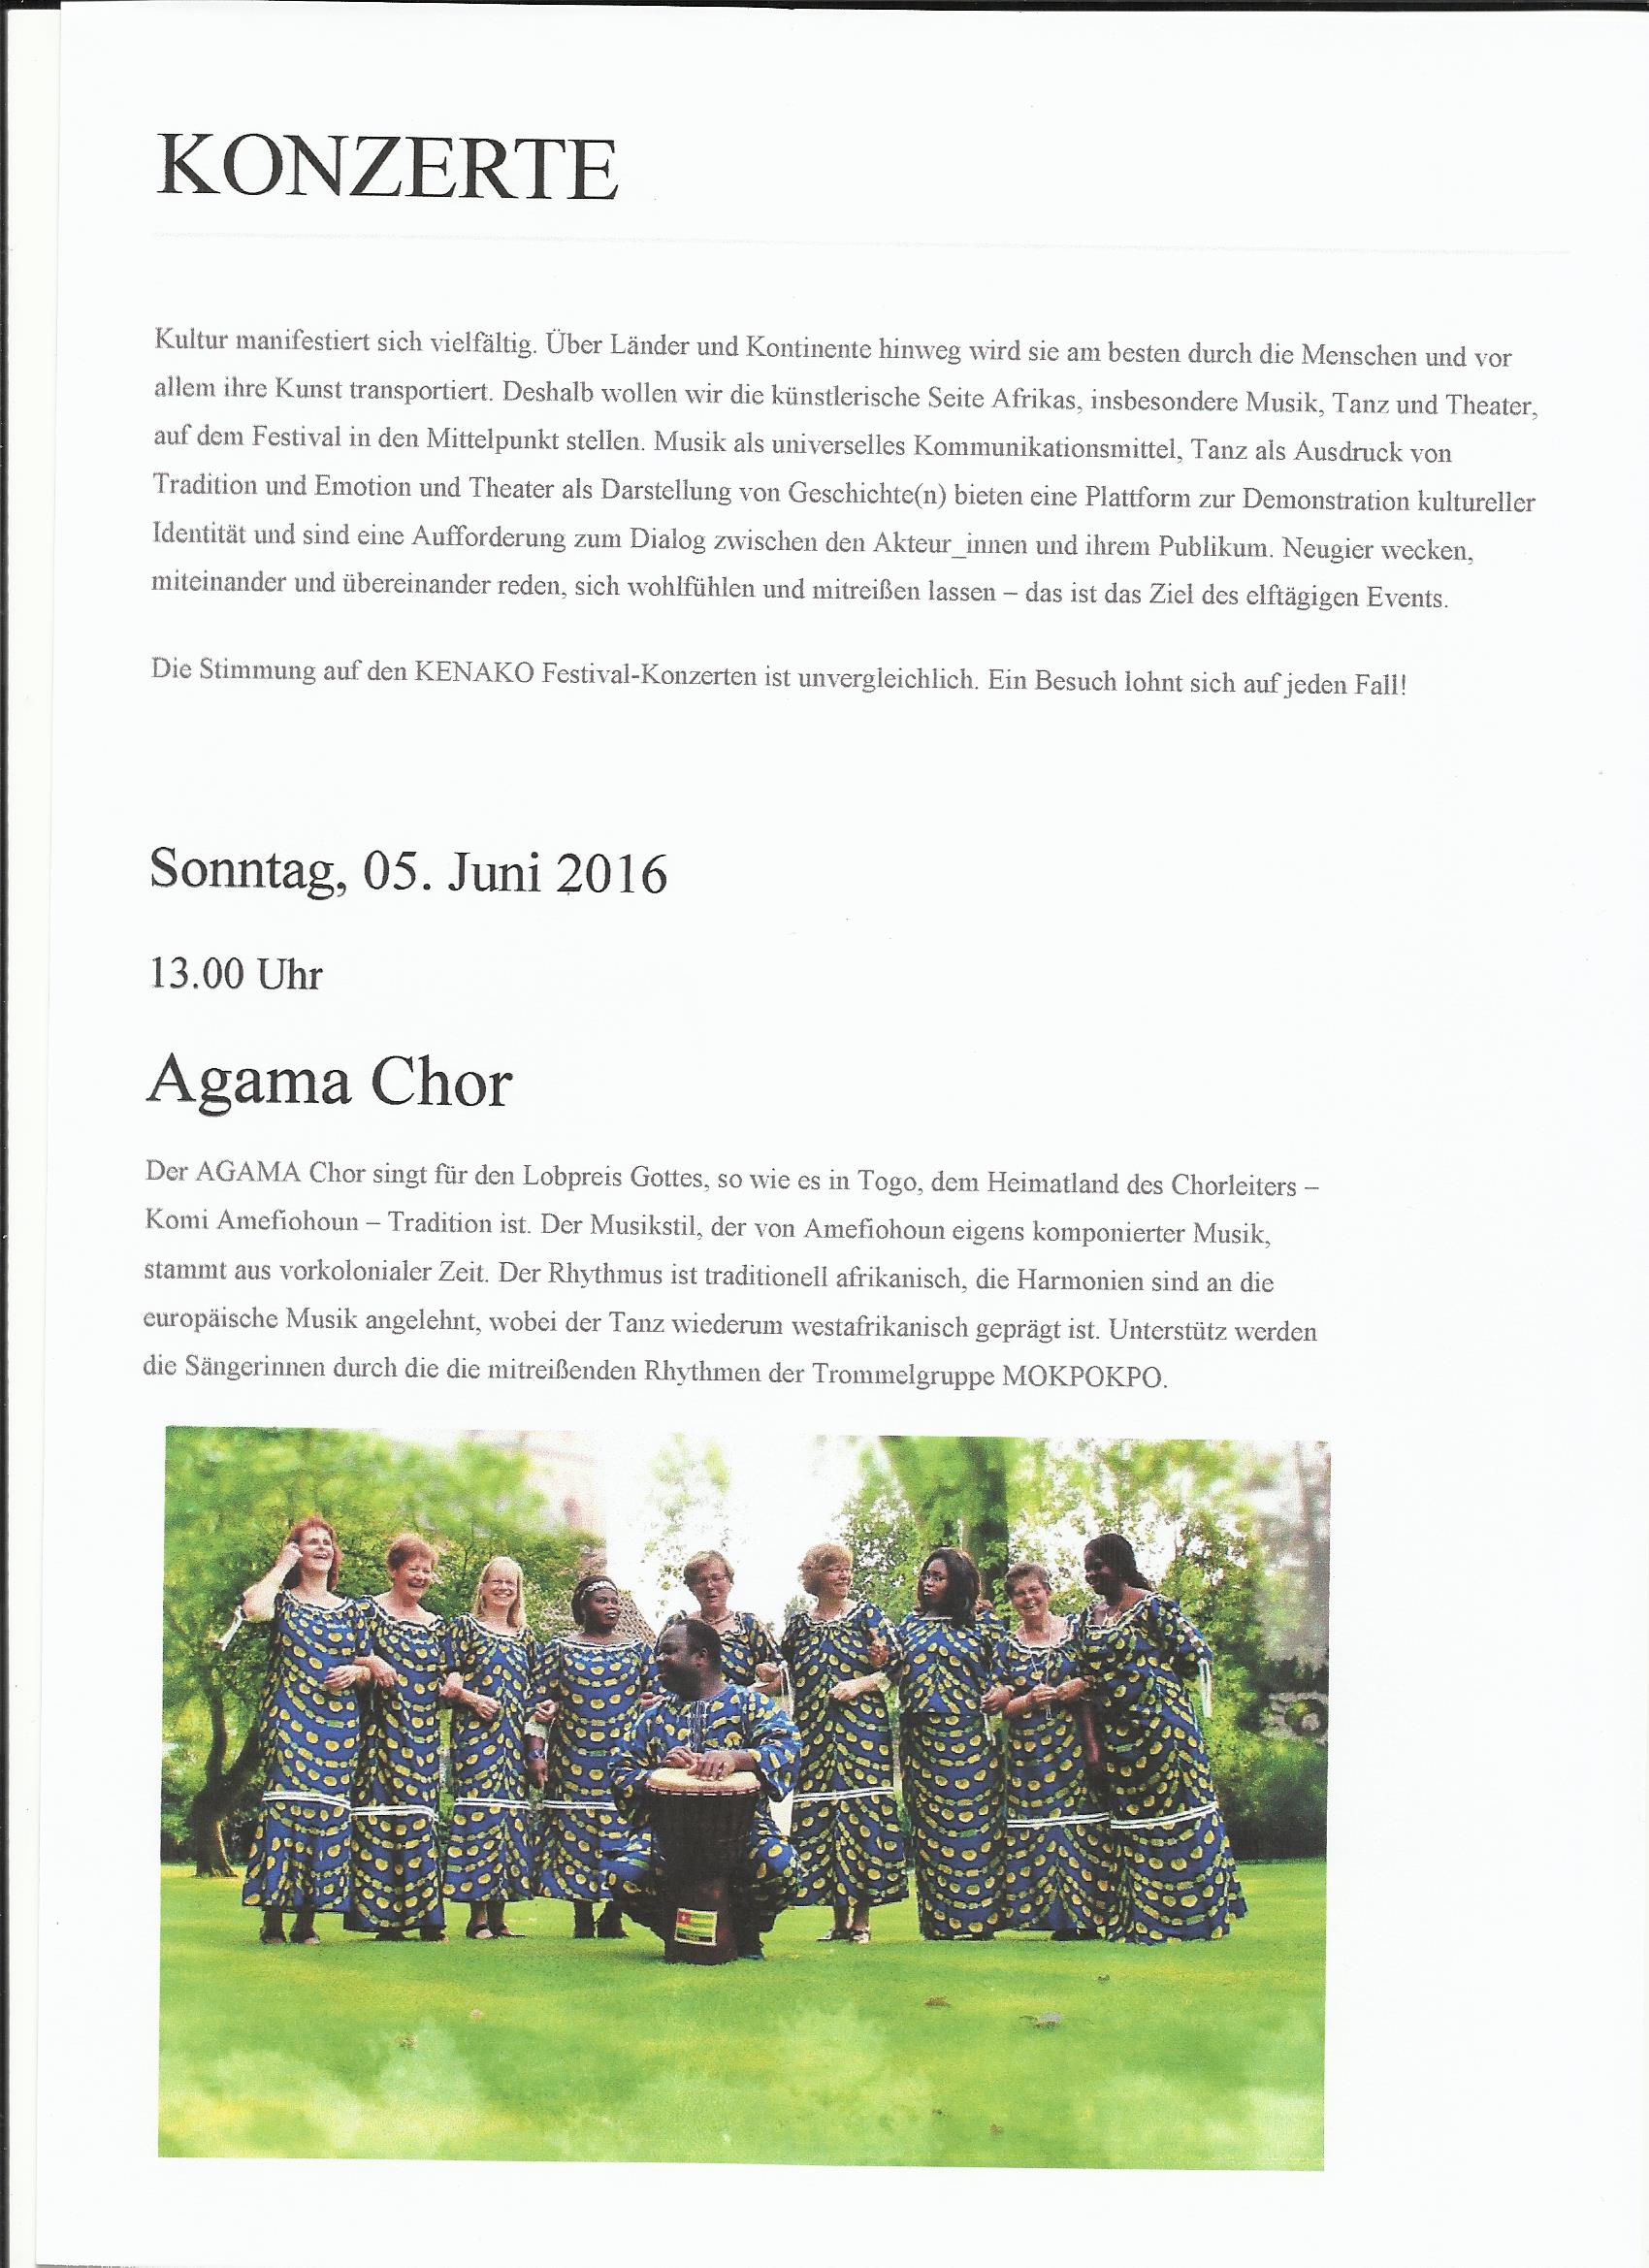 Vorankündigung - Konzert am 5. Juni 2016 Beim KeNaKo-Festival i